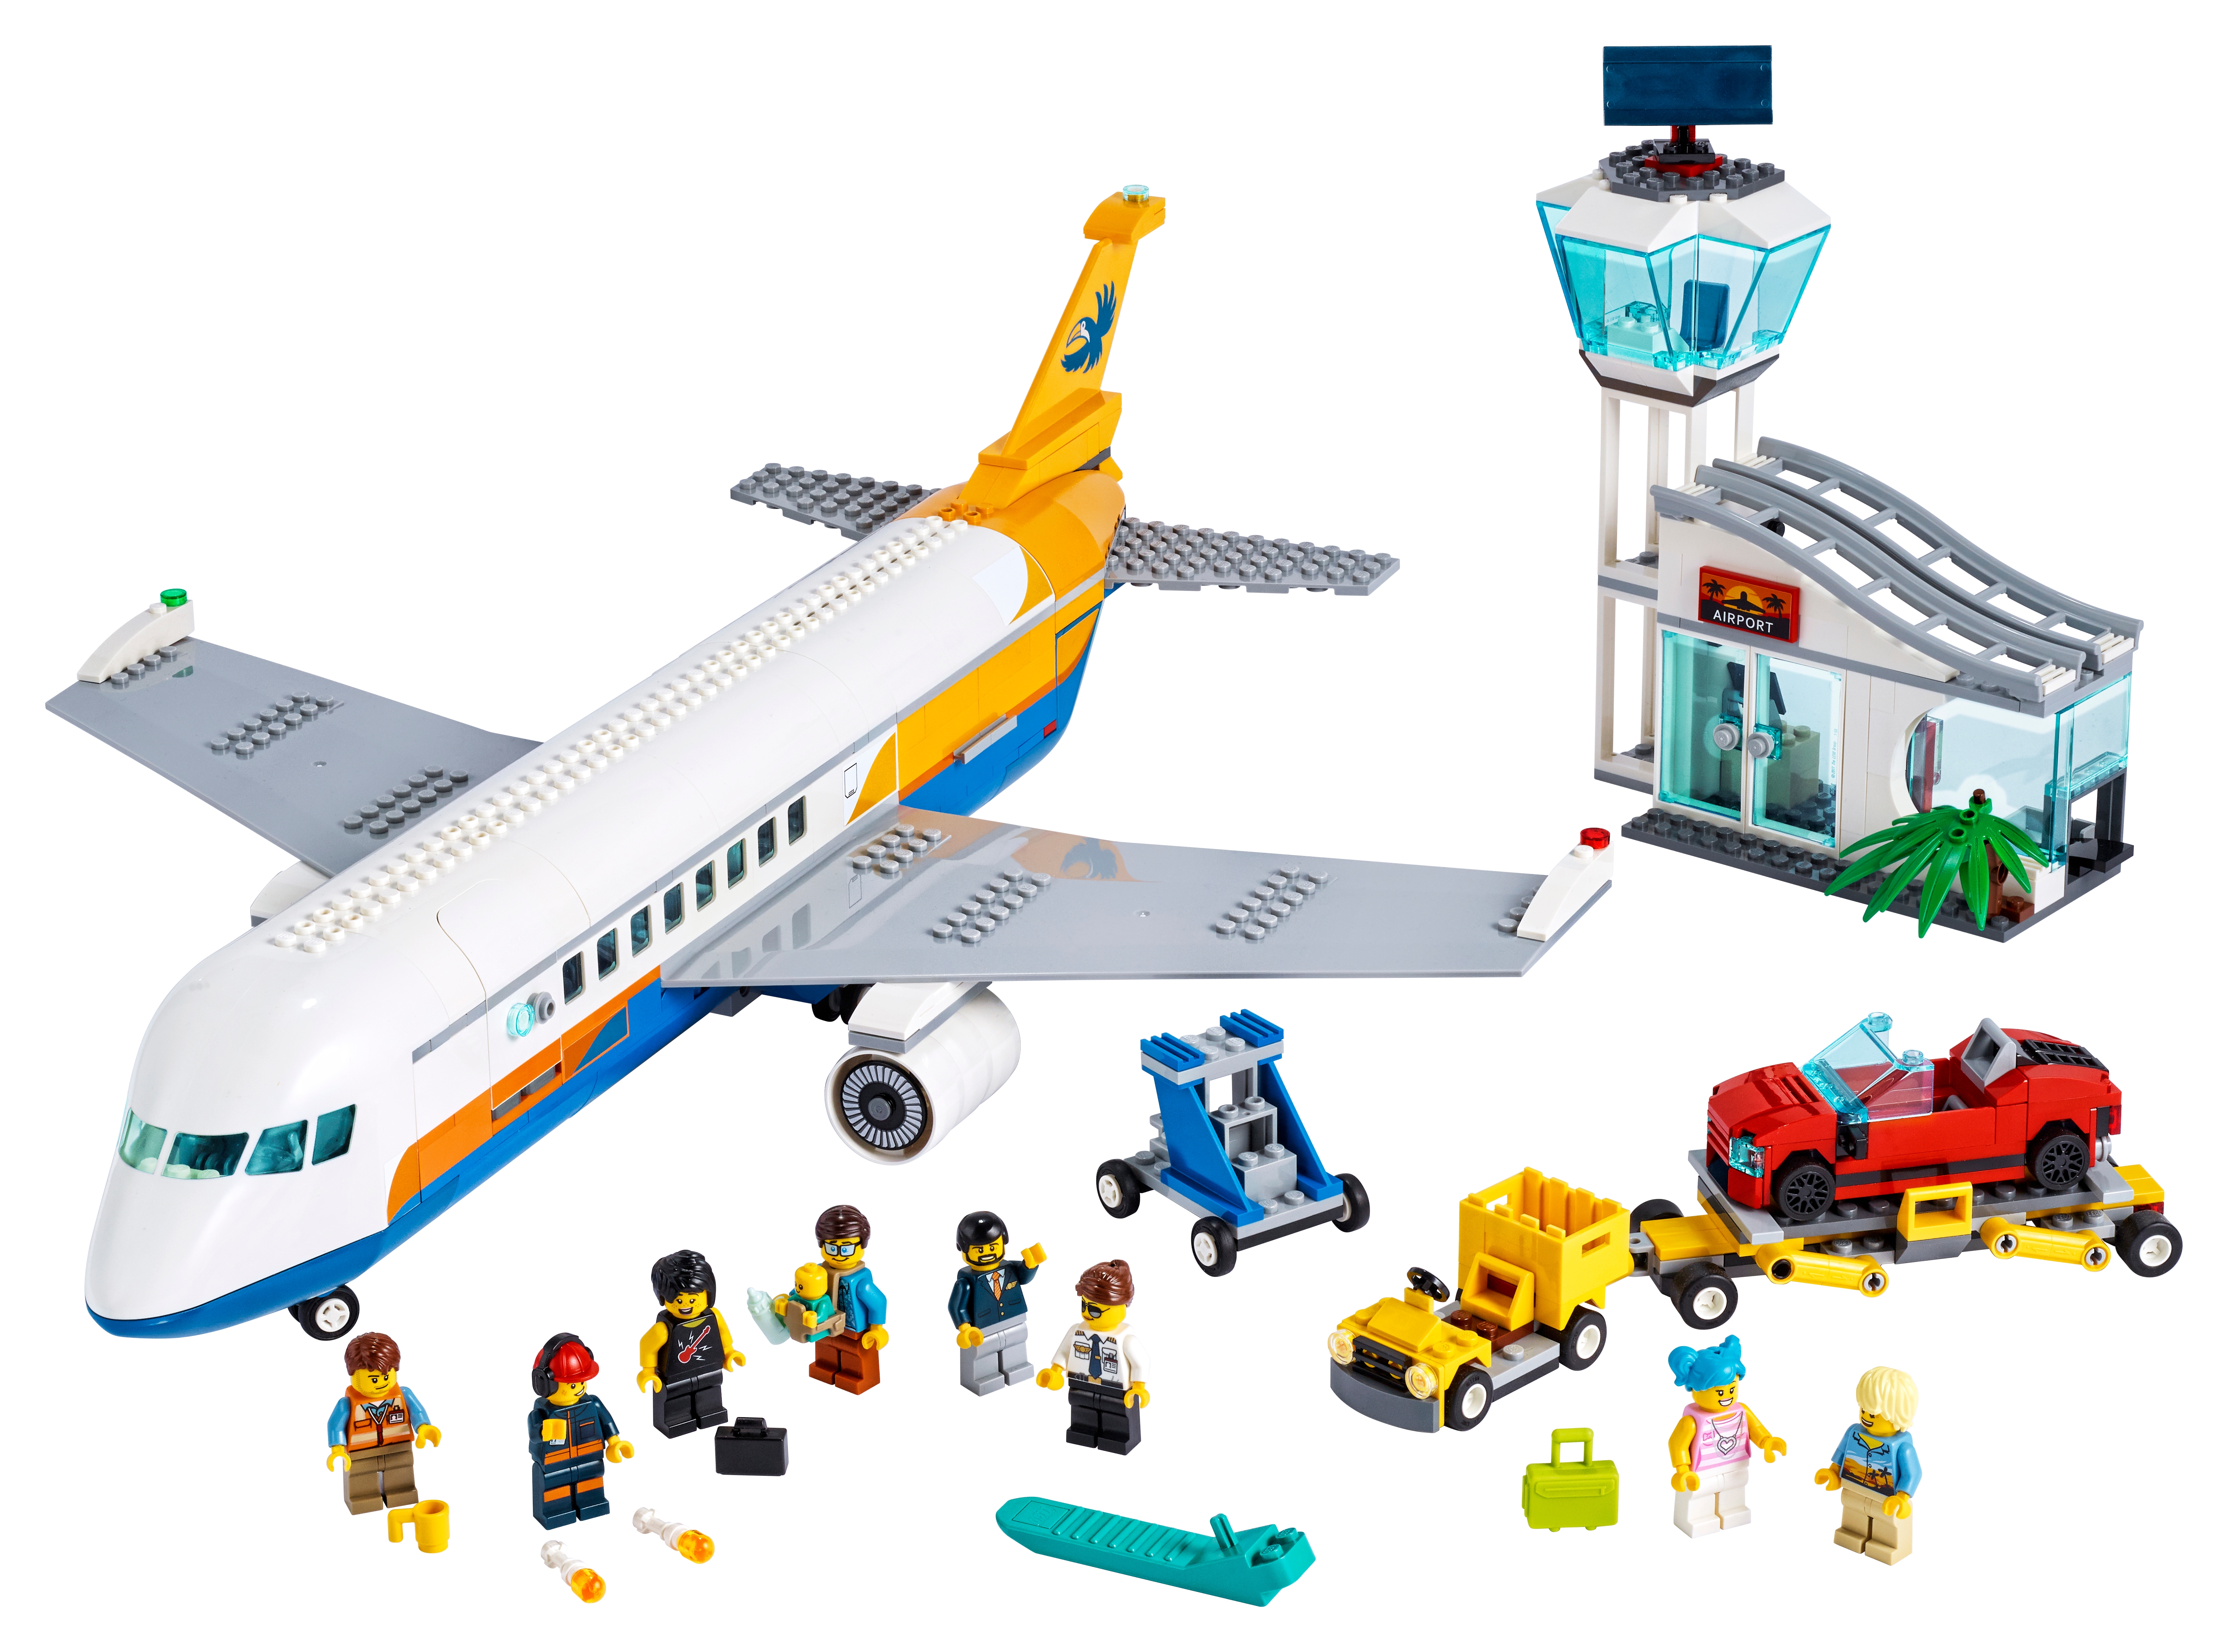 LEGO City Passenger Plane for sale online 3181